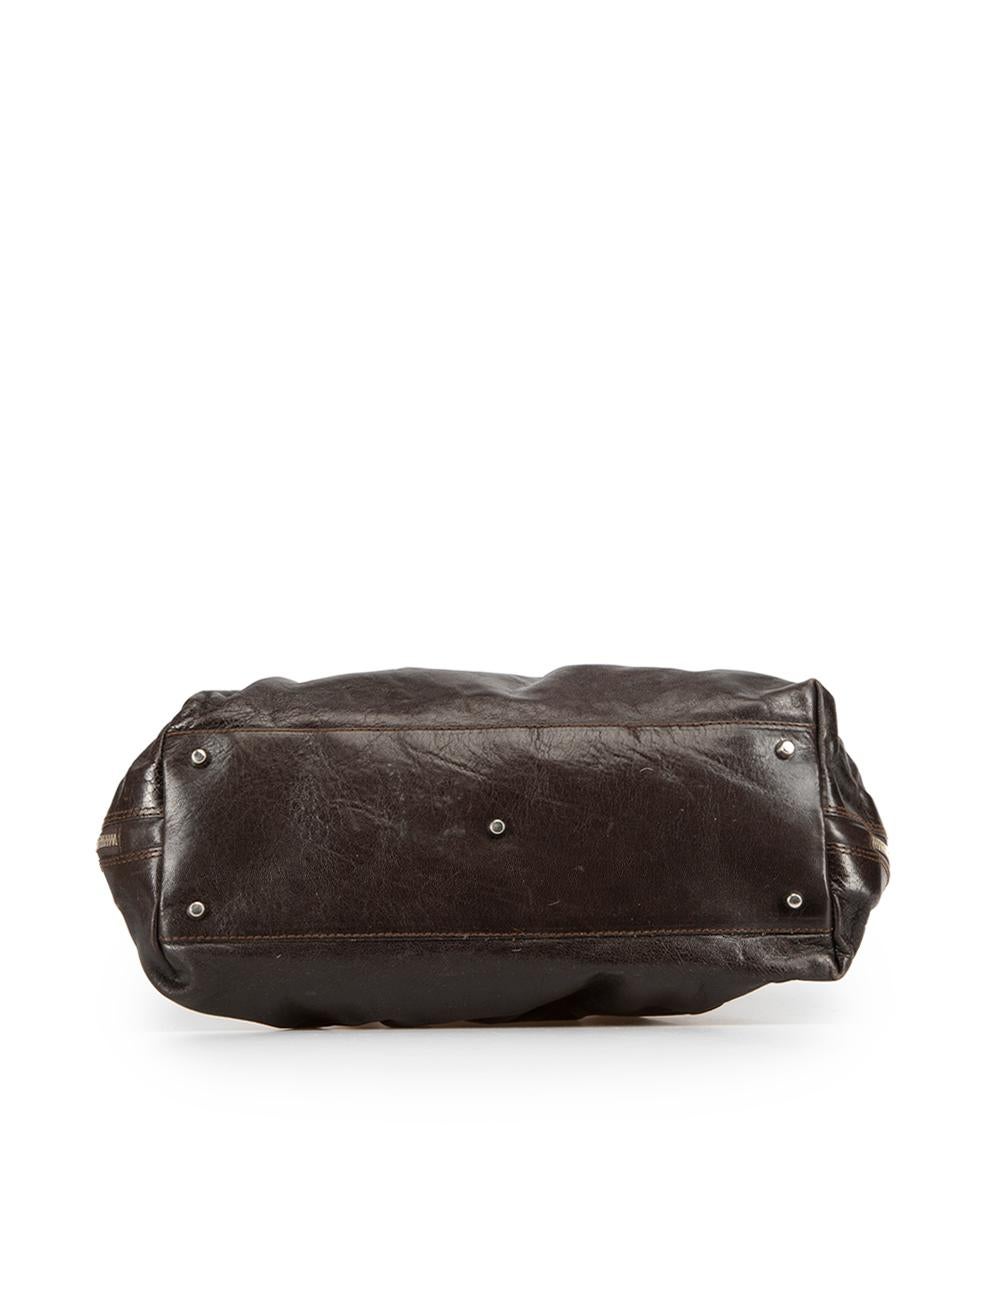 Furla Brown Leather Bowler Handbag In Good Condition In London, GB